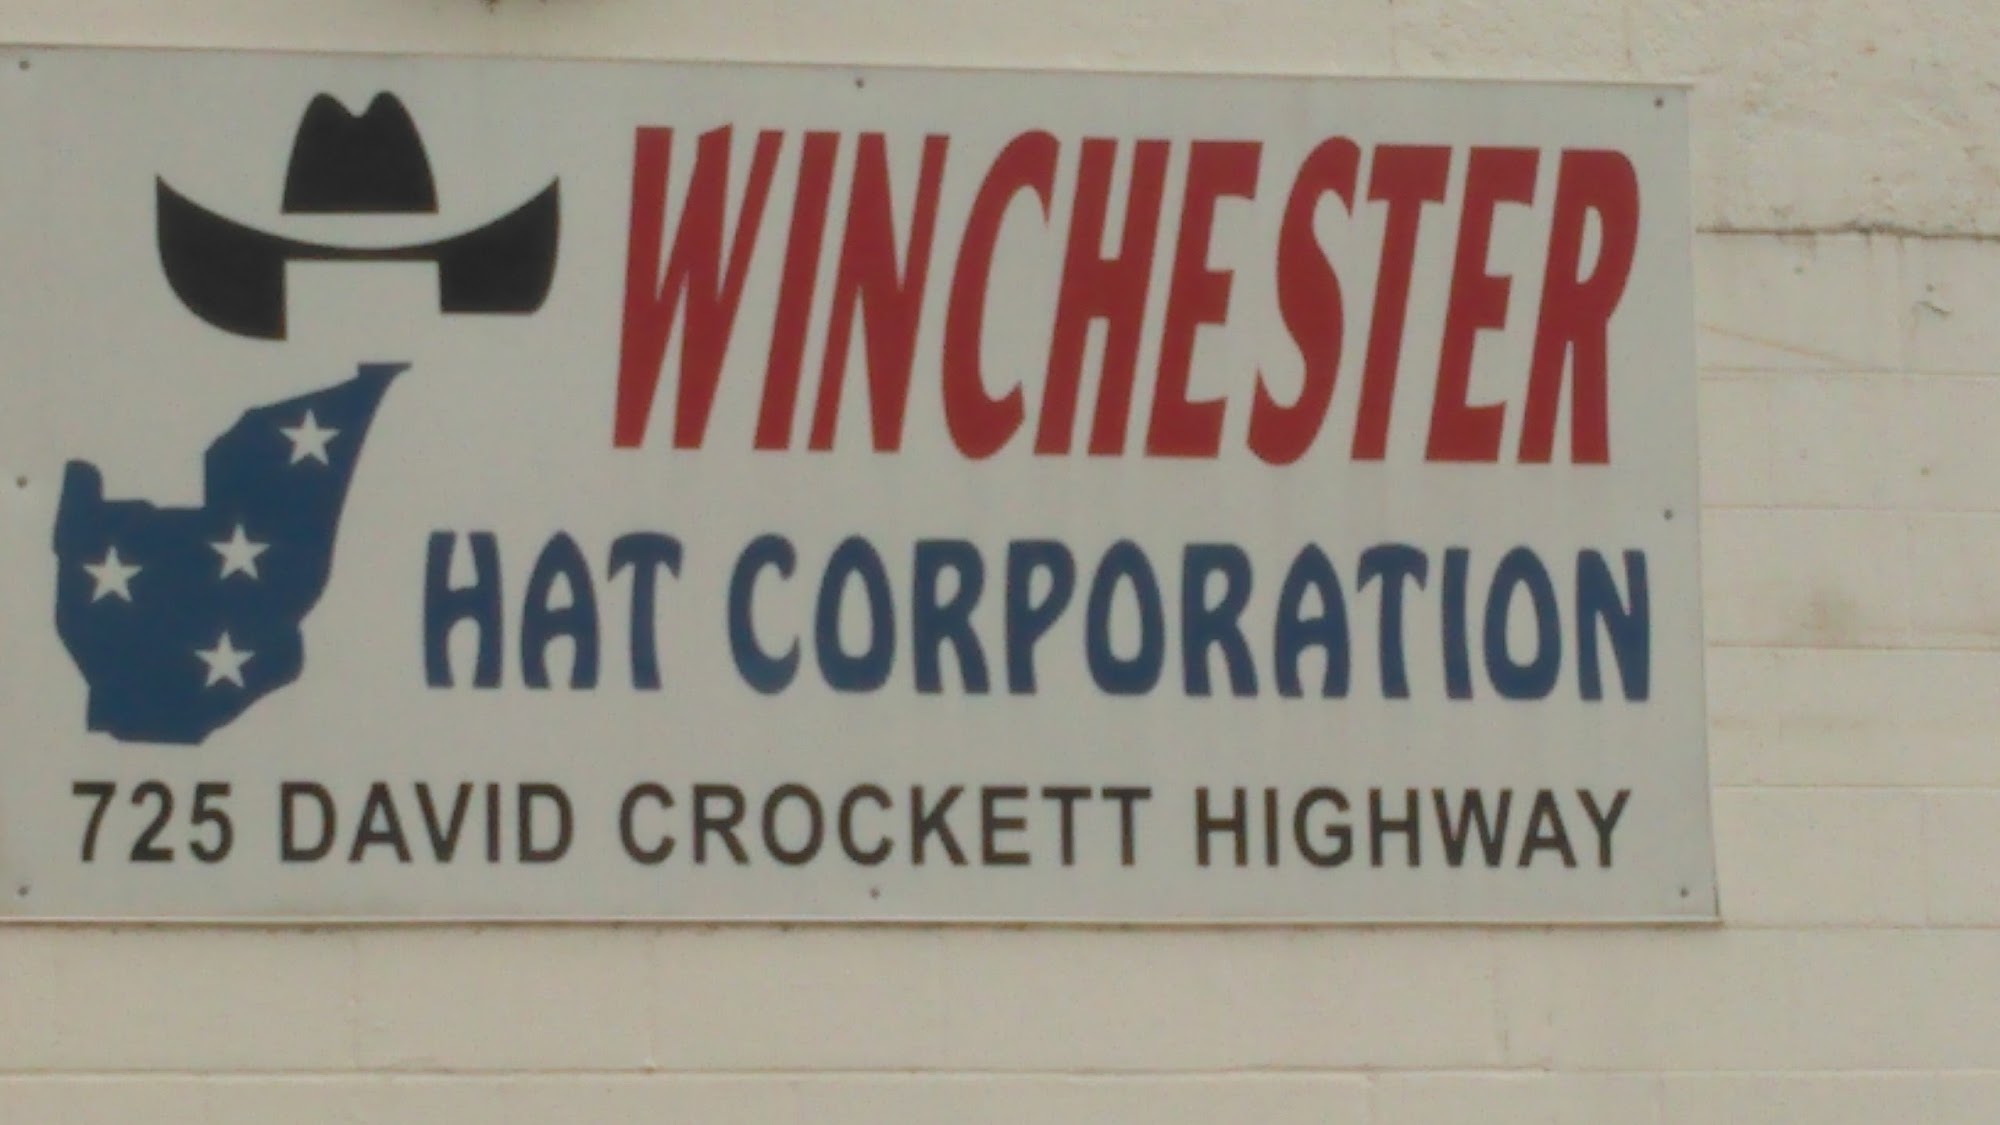 Winchester Hat Corporation